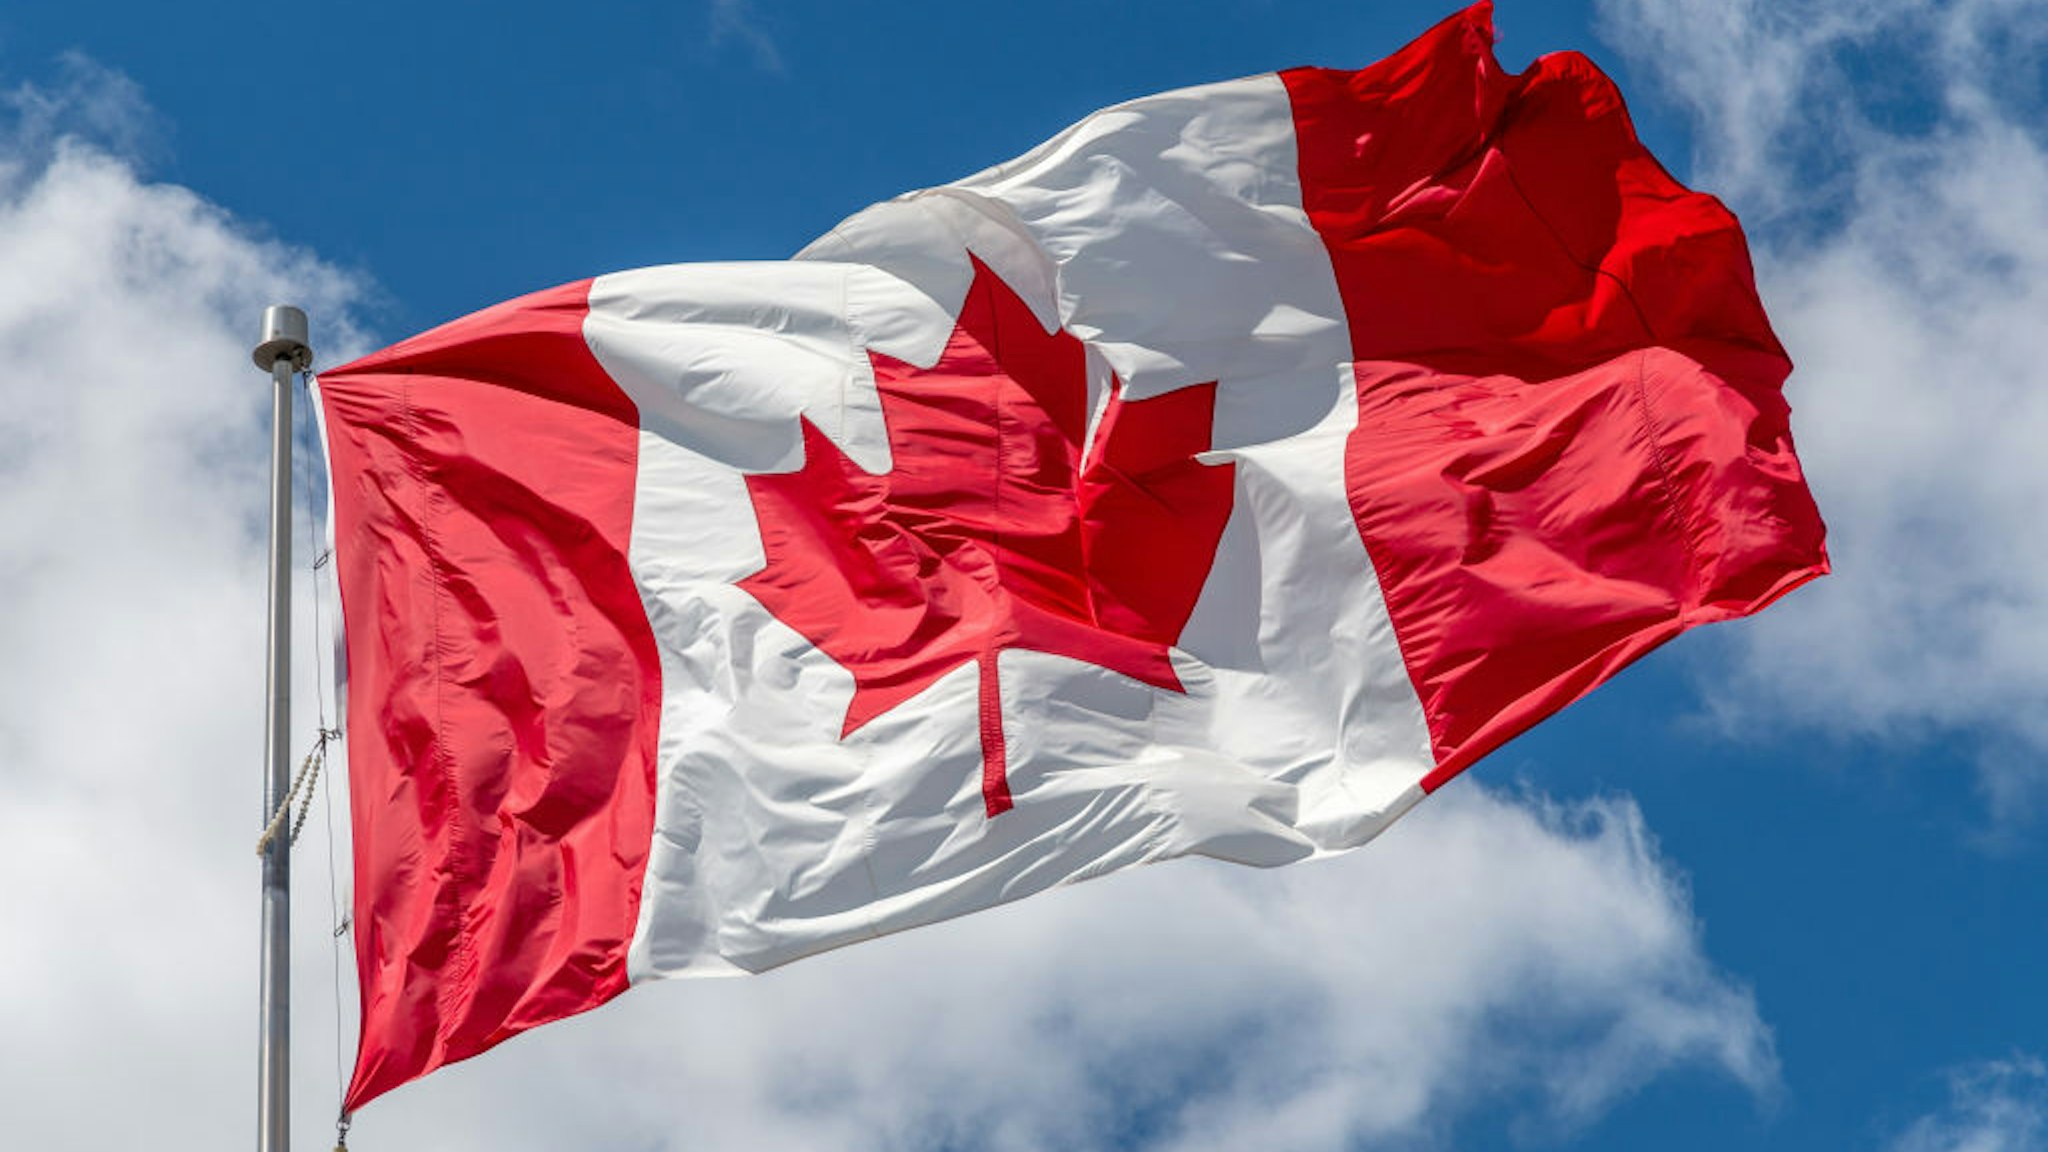 TORONTO, ONTARIO, CANADA - 2020/06/12: Canadian National flag waving on a clear sunny day. (Photo by Roberto Machado Noa/LightRocket via Getty Images)